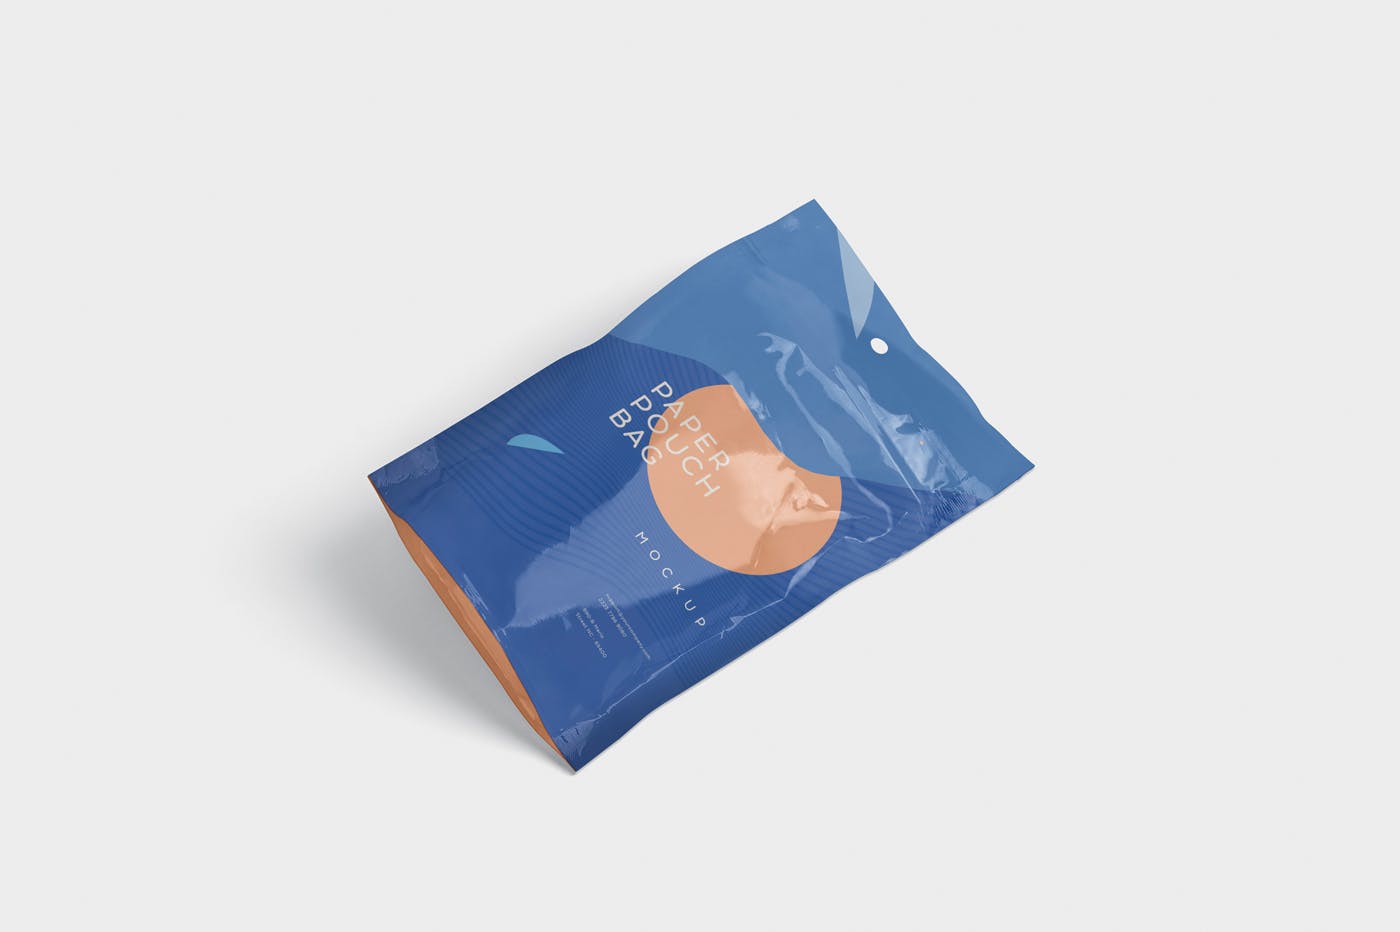 小尺寸零食包装纸袋设计图样机 Paper Pouch Bag Mockup in Small Size插图(3)